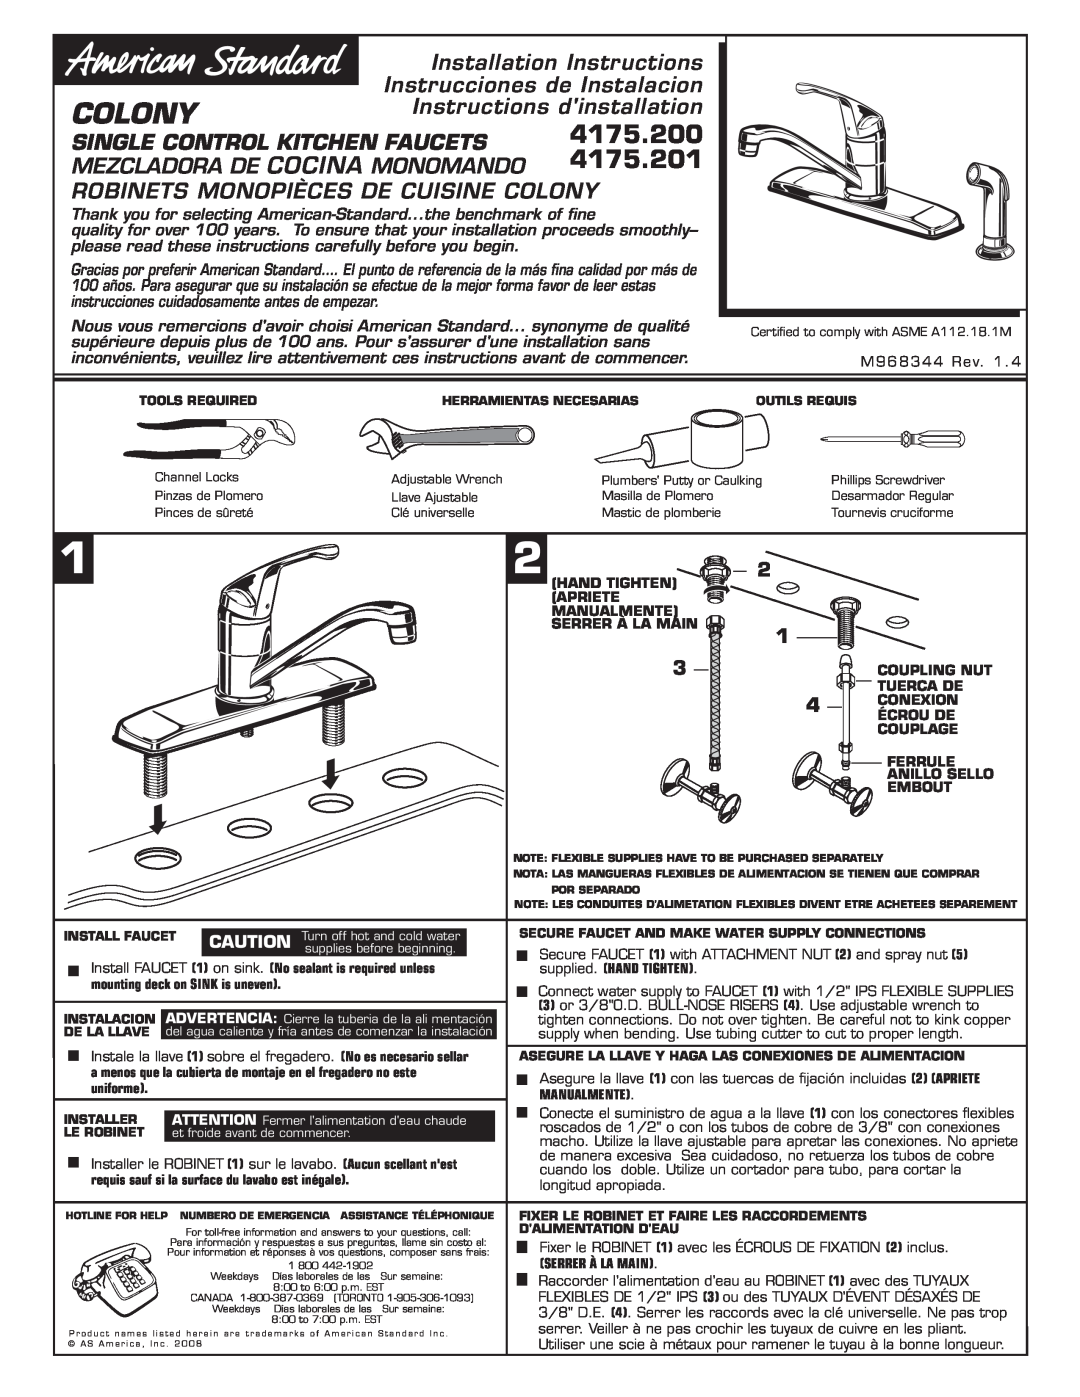 American Standard installation instructions Colony, 4175.200, 4175.201, Installation Instructions 